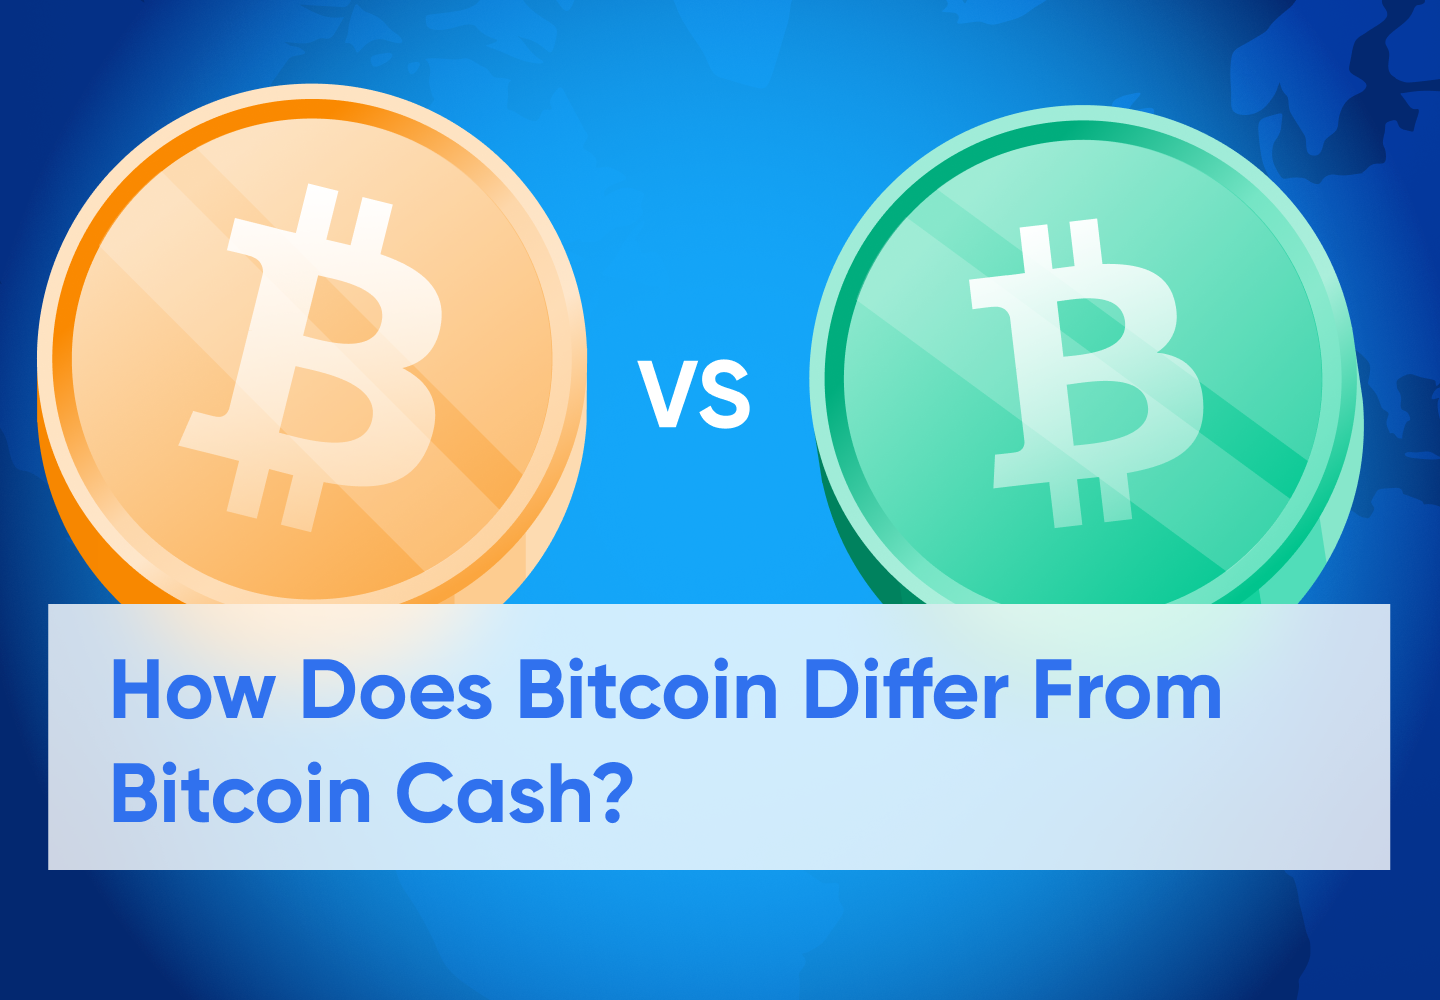 Bitcoin (BTC) Vs. Bitcoin Cash (BTH)